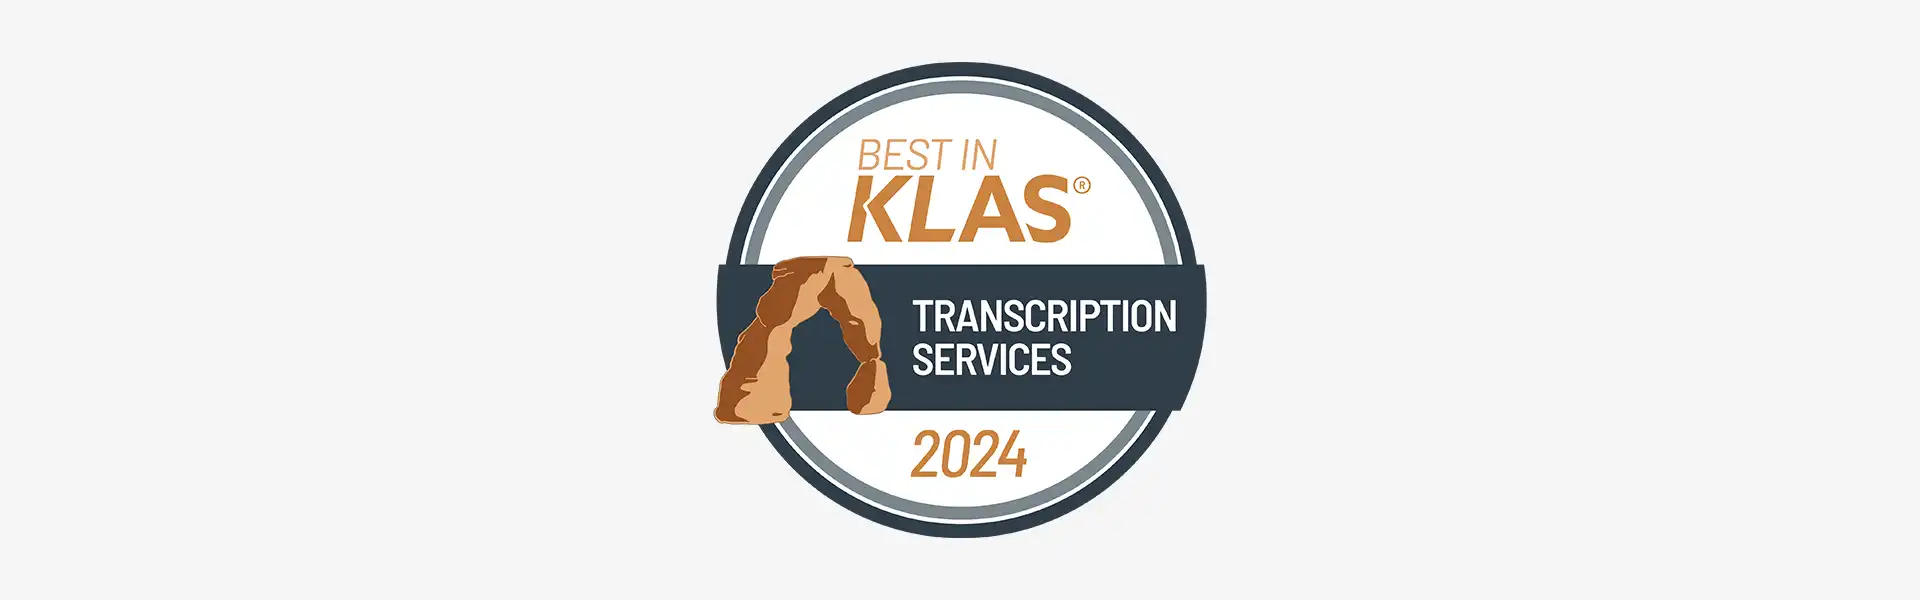 AQuity-Best-in-KLAS-for-Transcription-2024